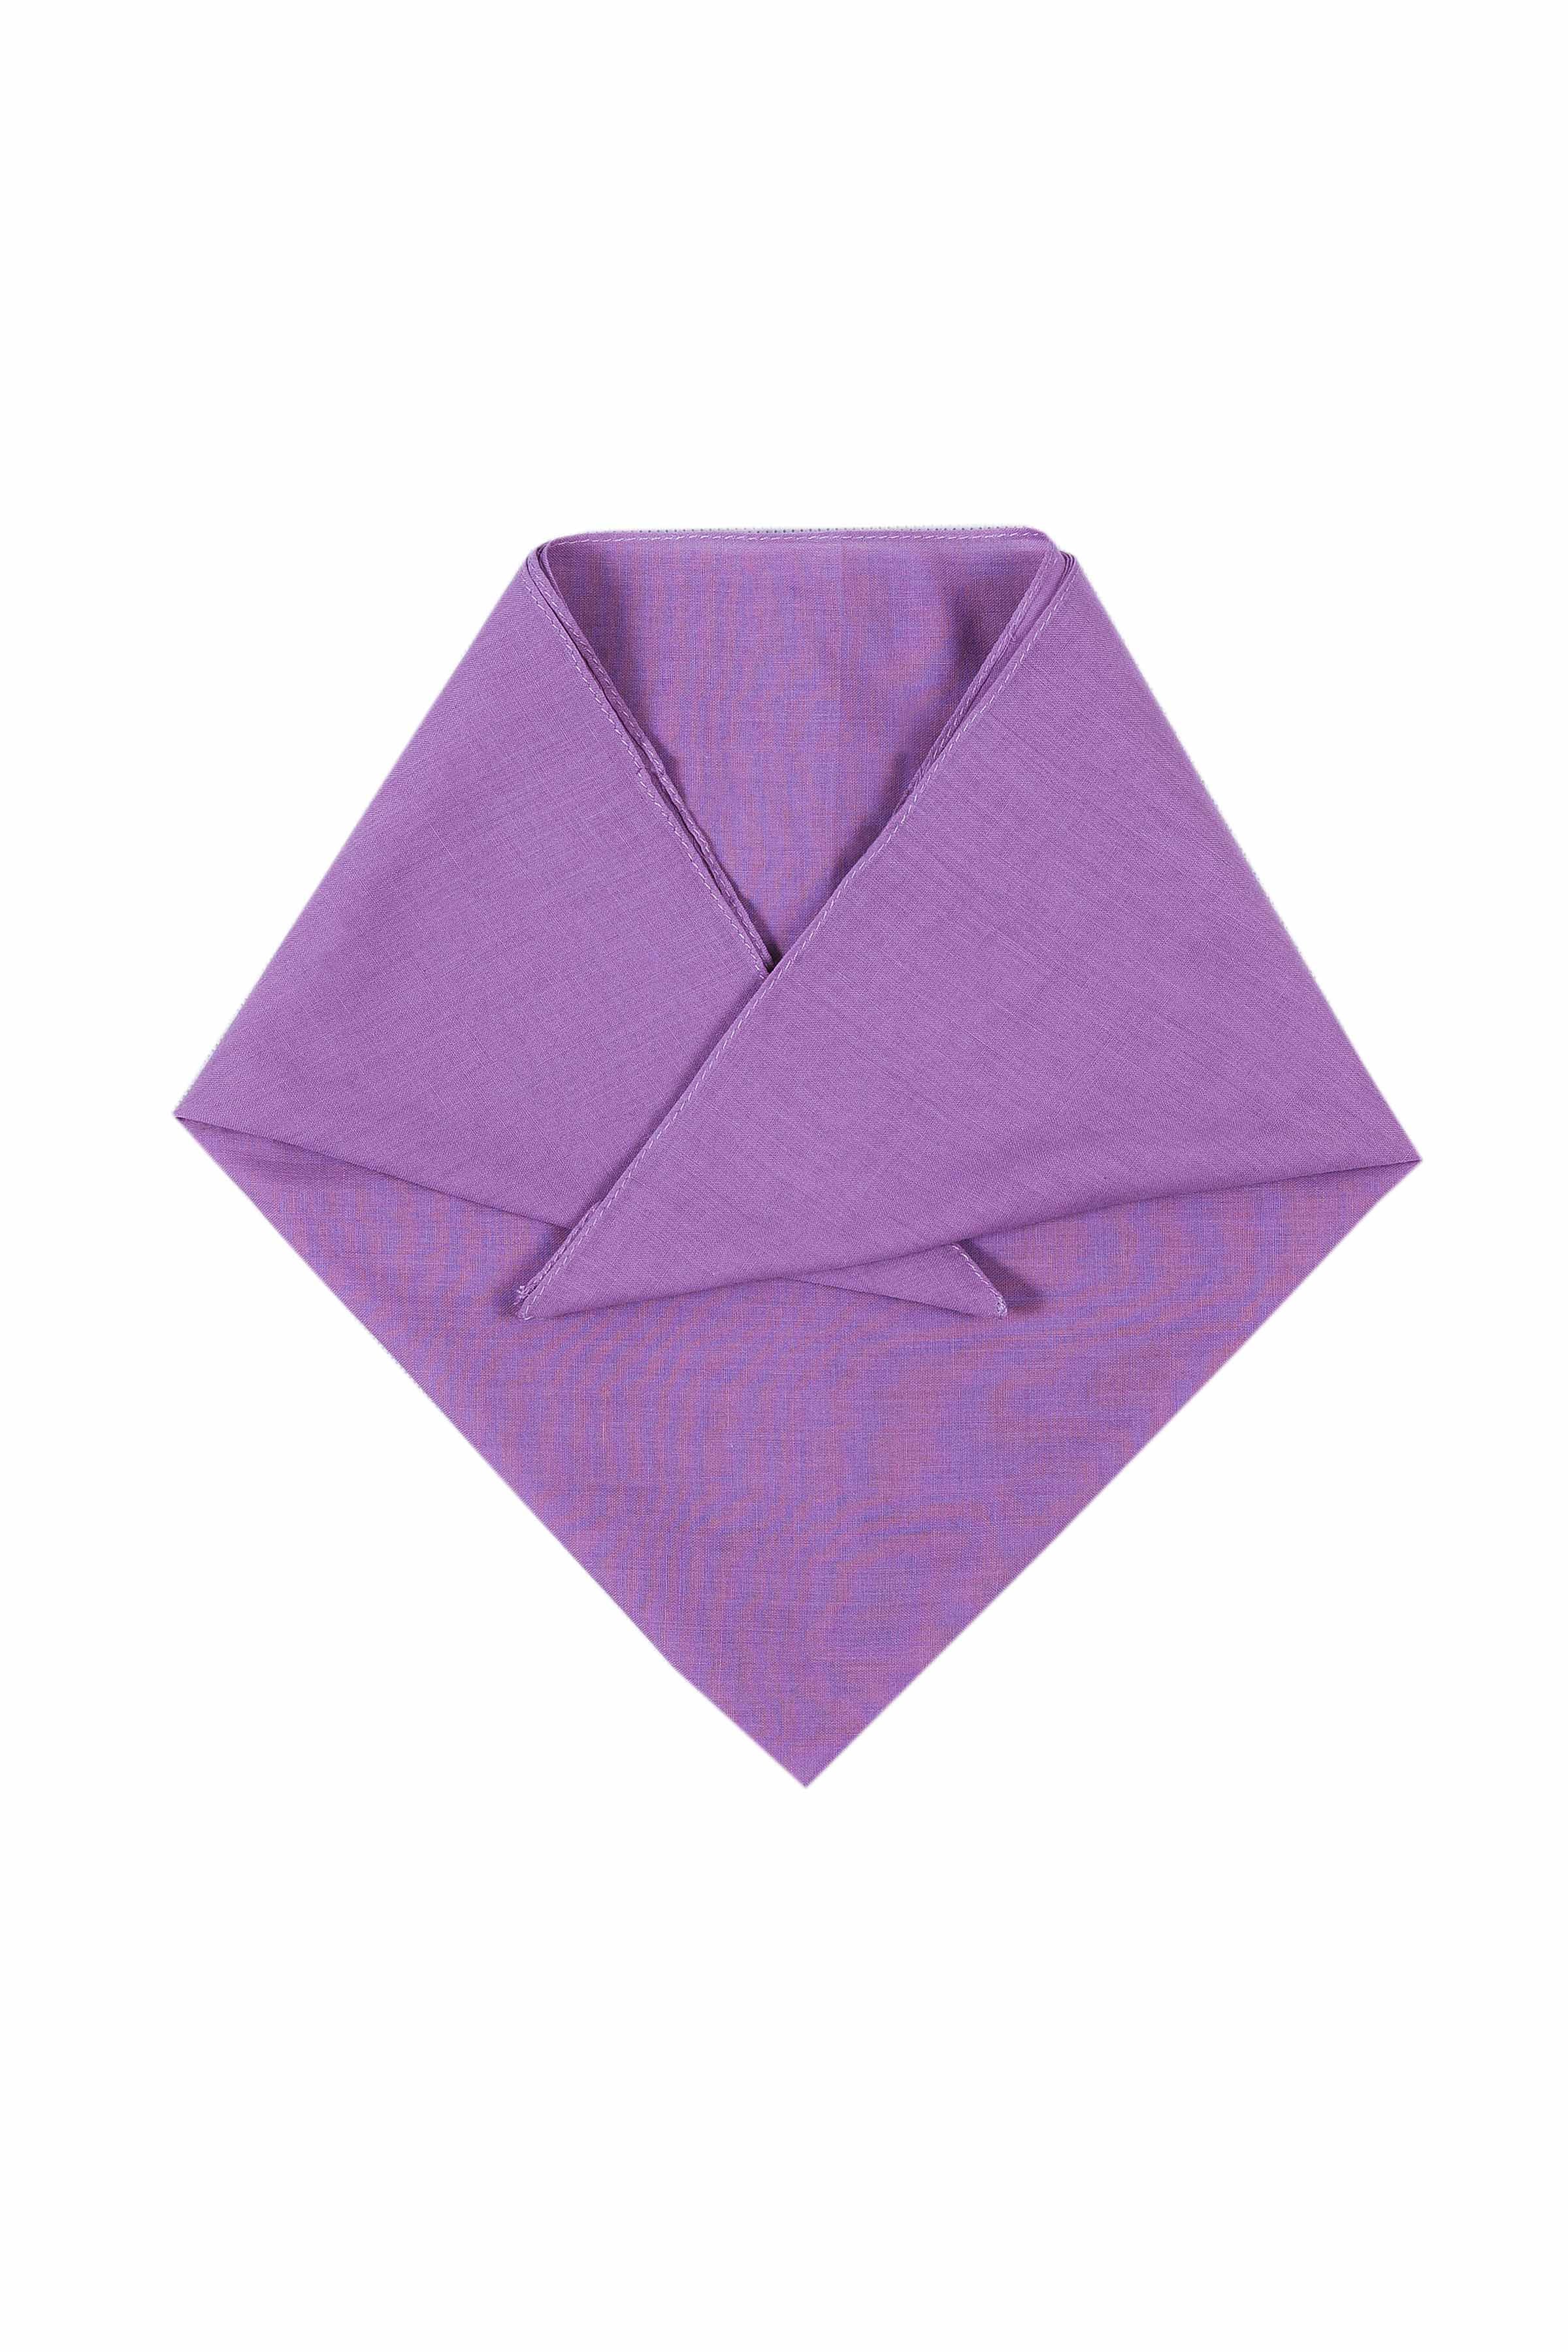 New Cotton Bandana Necktie Plain